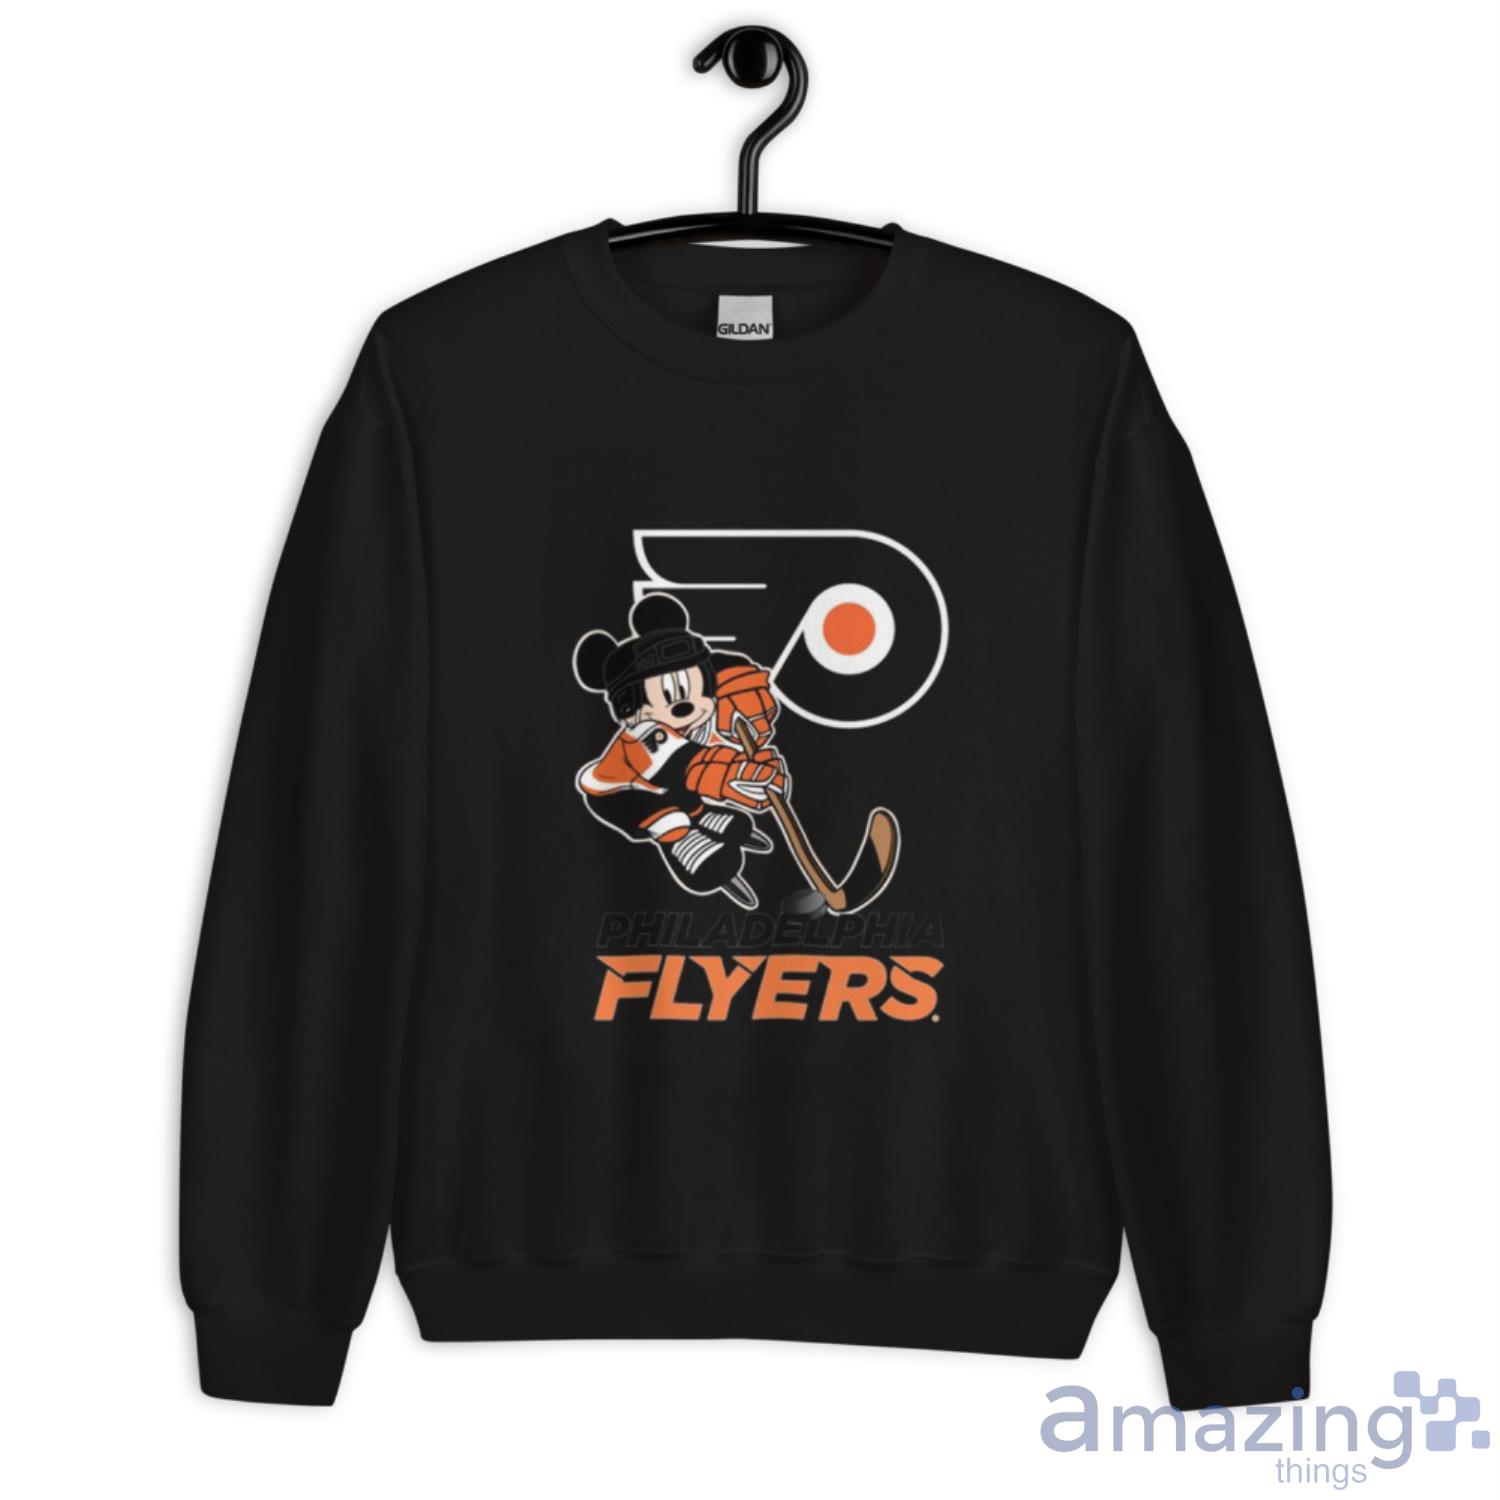 NHL Philadelphia Flyers Mickey Mouse Disney Hockey T Shirt Youth T-Shirt